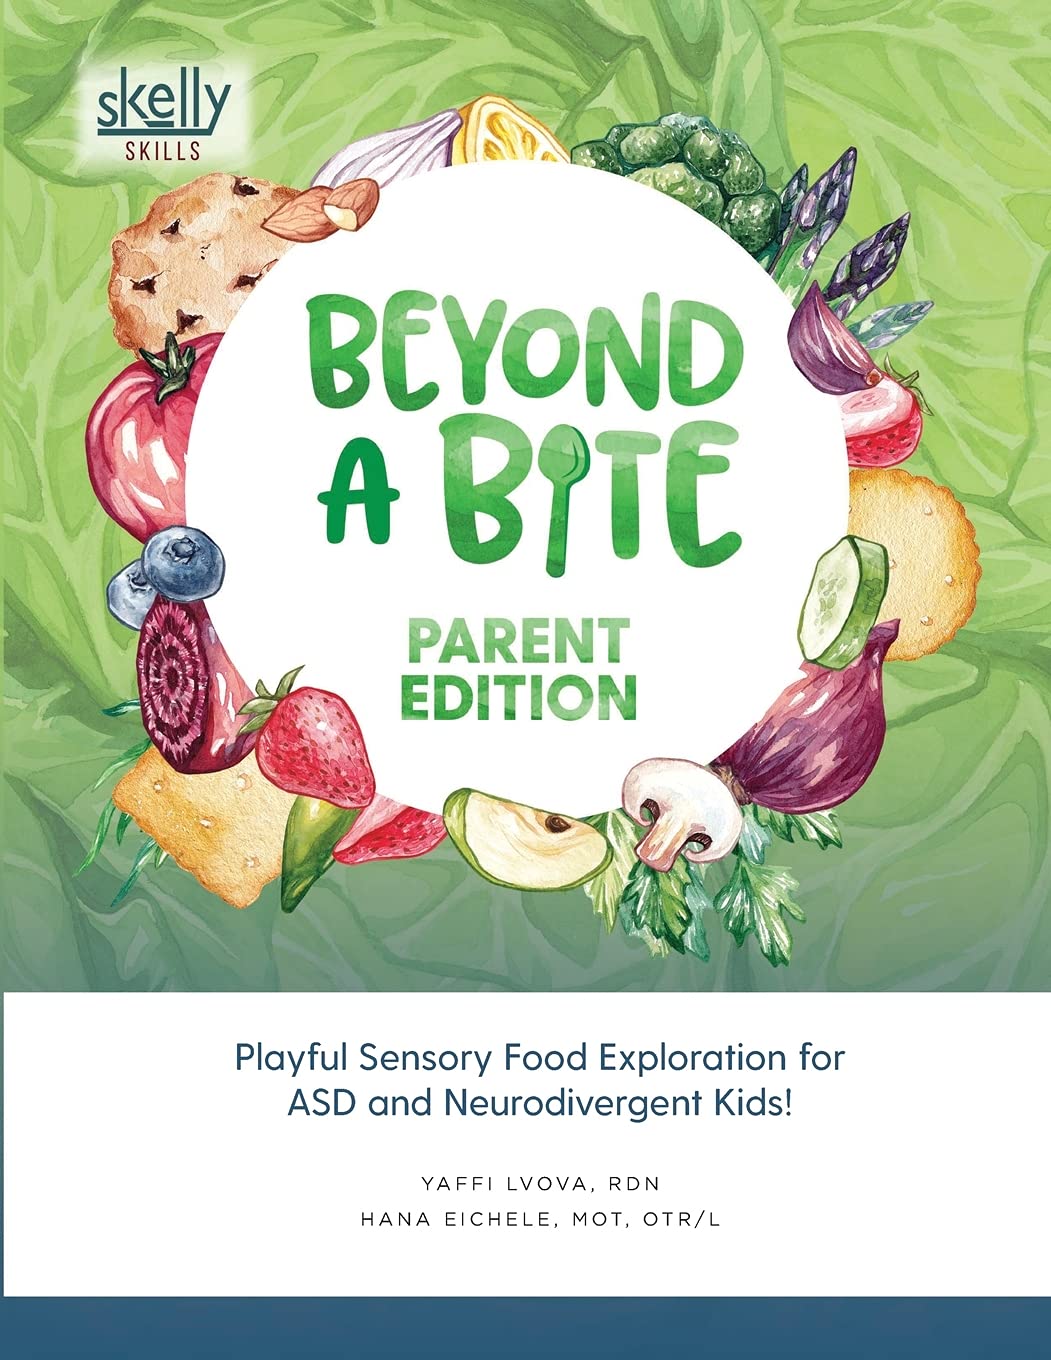 Beyond A Bite Parent Edition: Playful Sensory Food Exploration for ASD and Neurodivergent Kids!